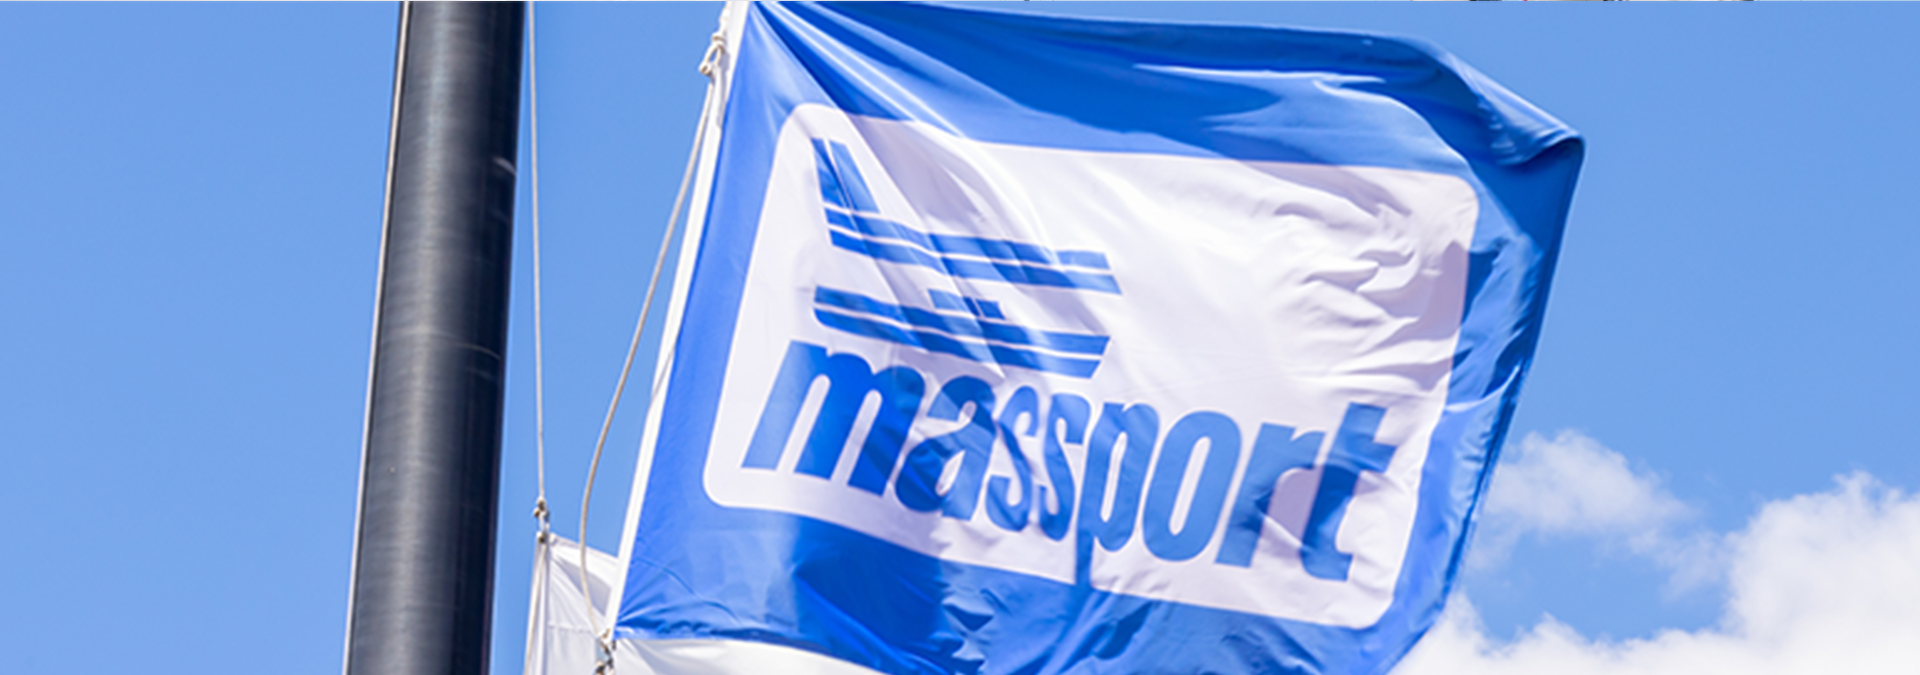 Massport Flag